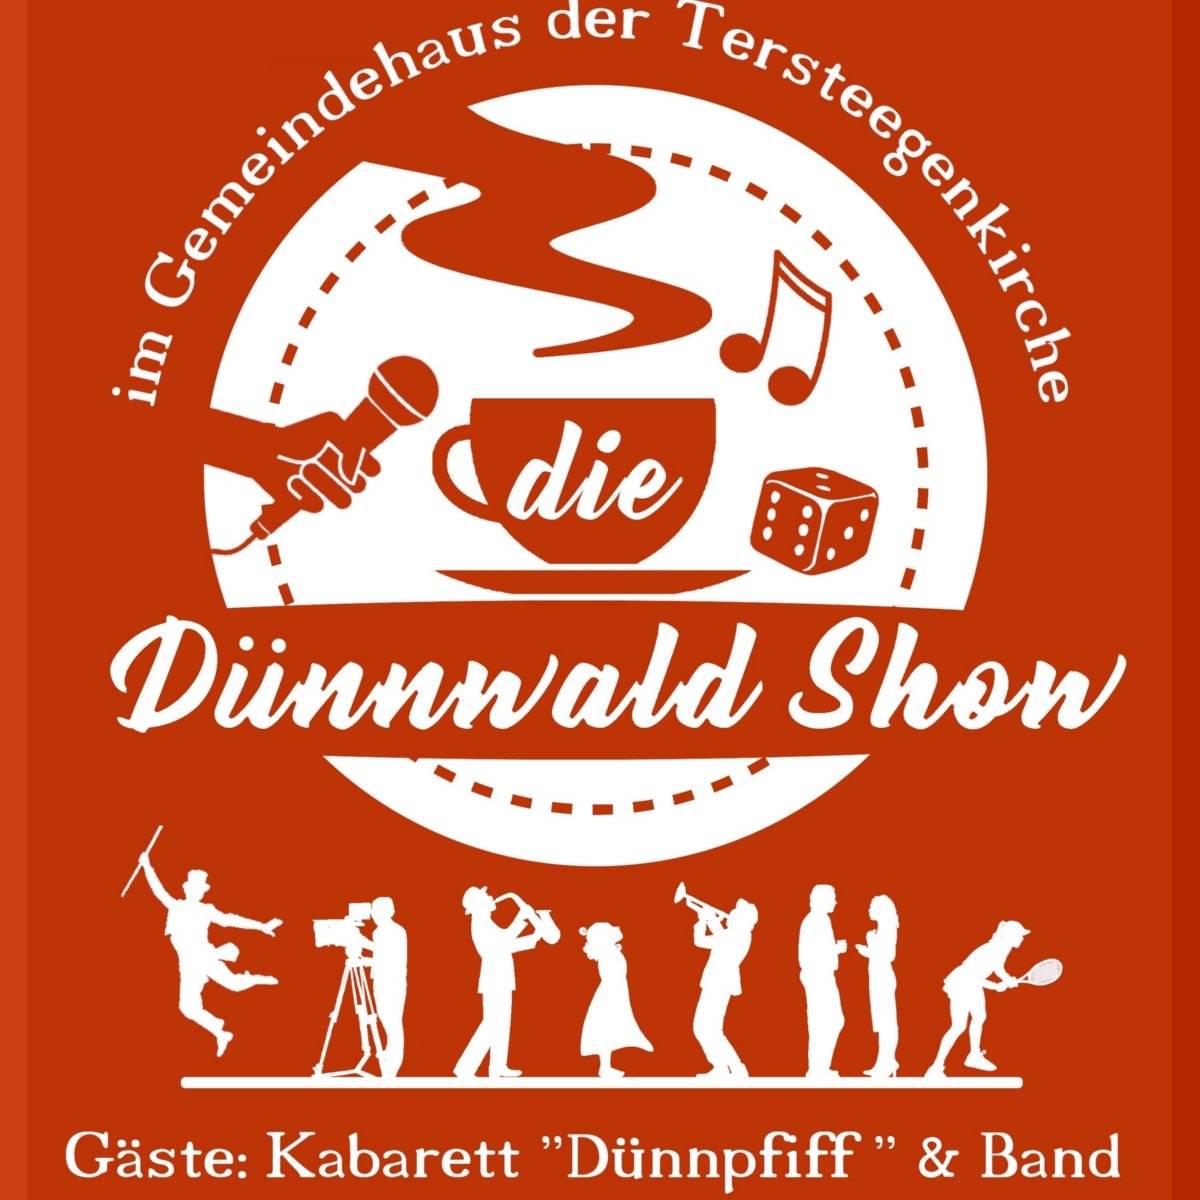 Plakat Dünnwald Show Dünnpfiff (c) Berberich